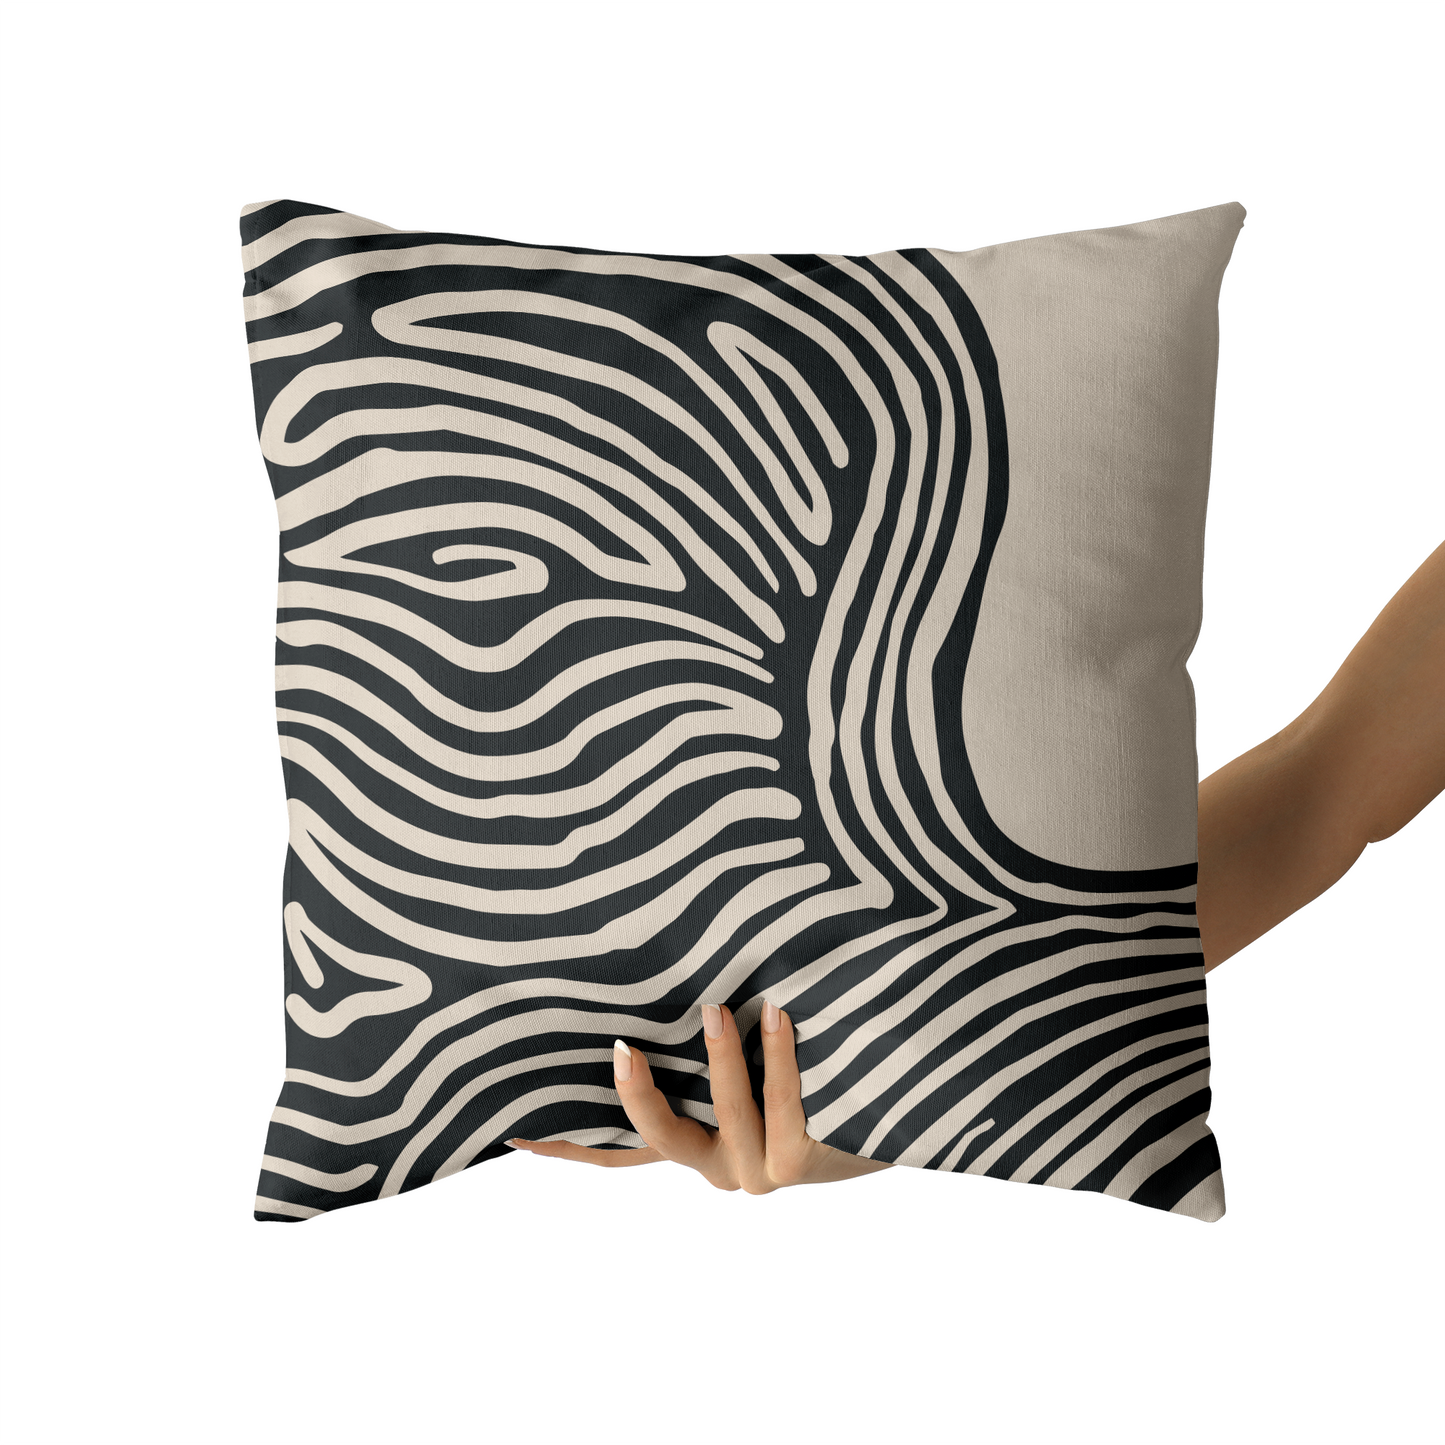 Danish Design Living Room Decor Throw Pillow